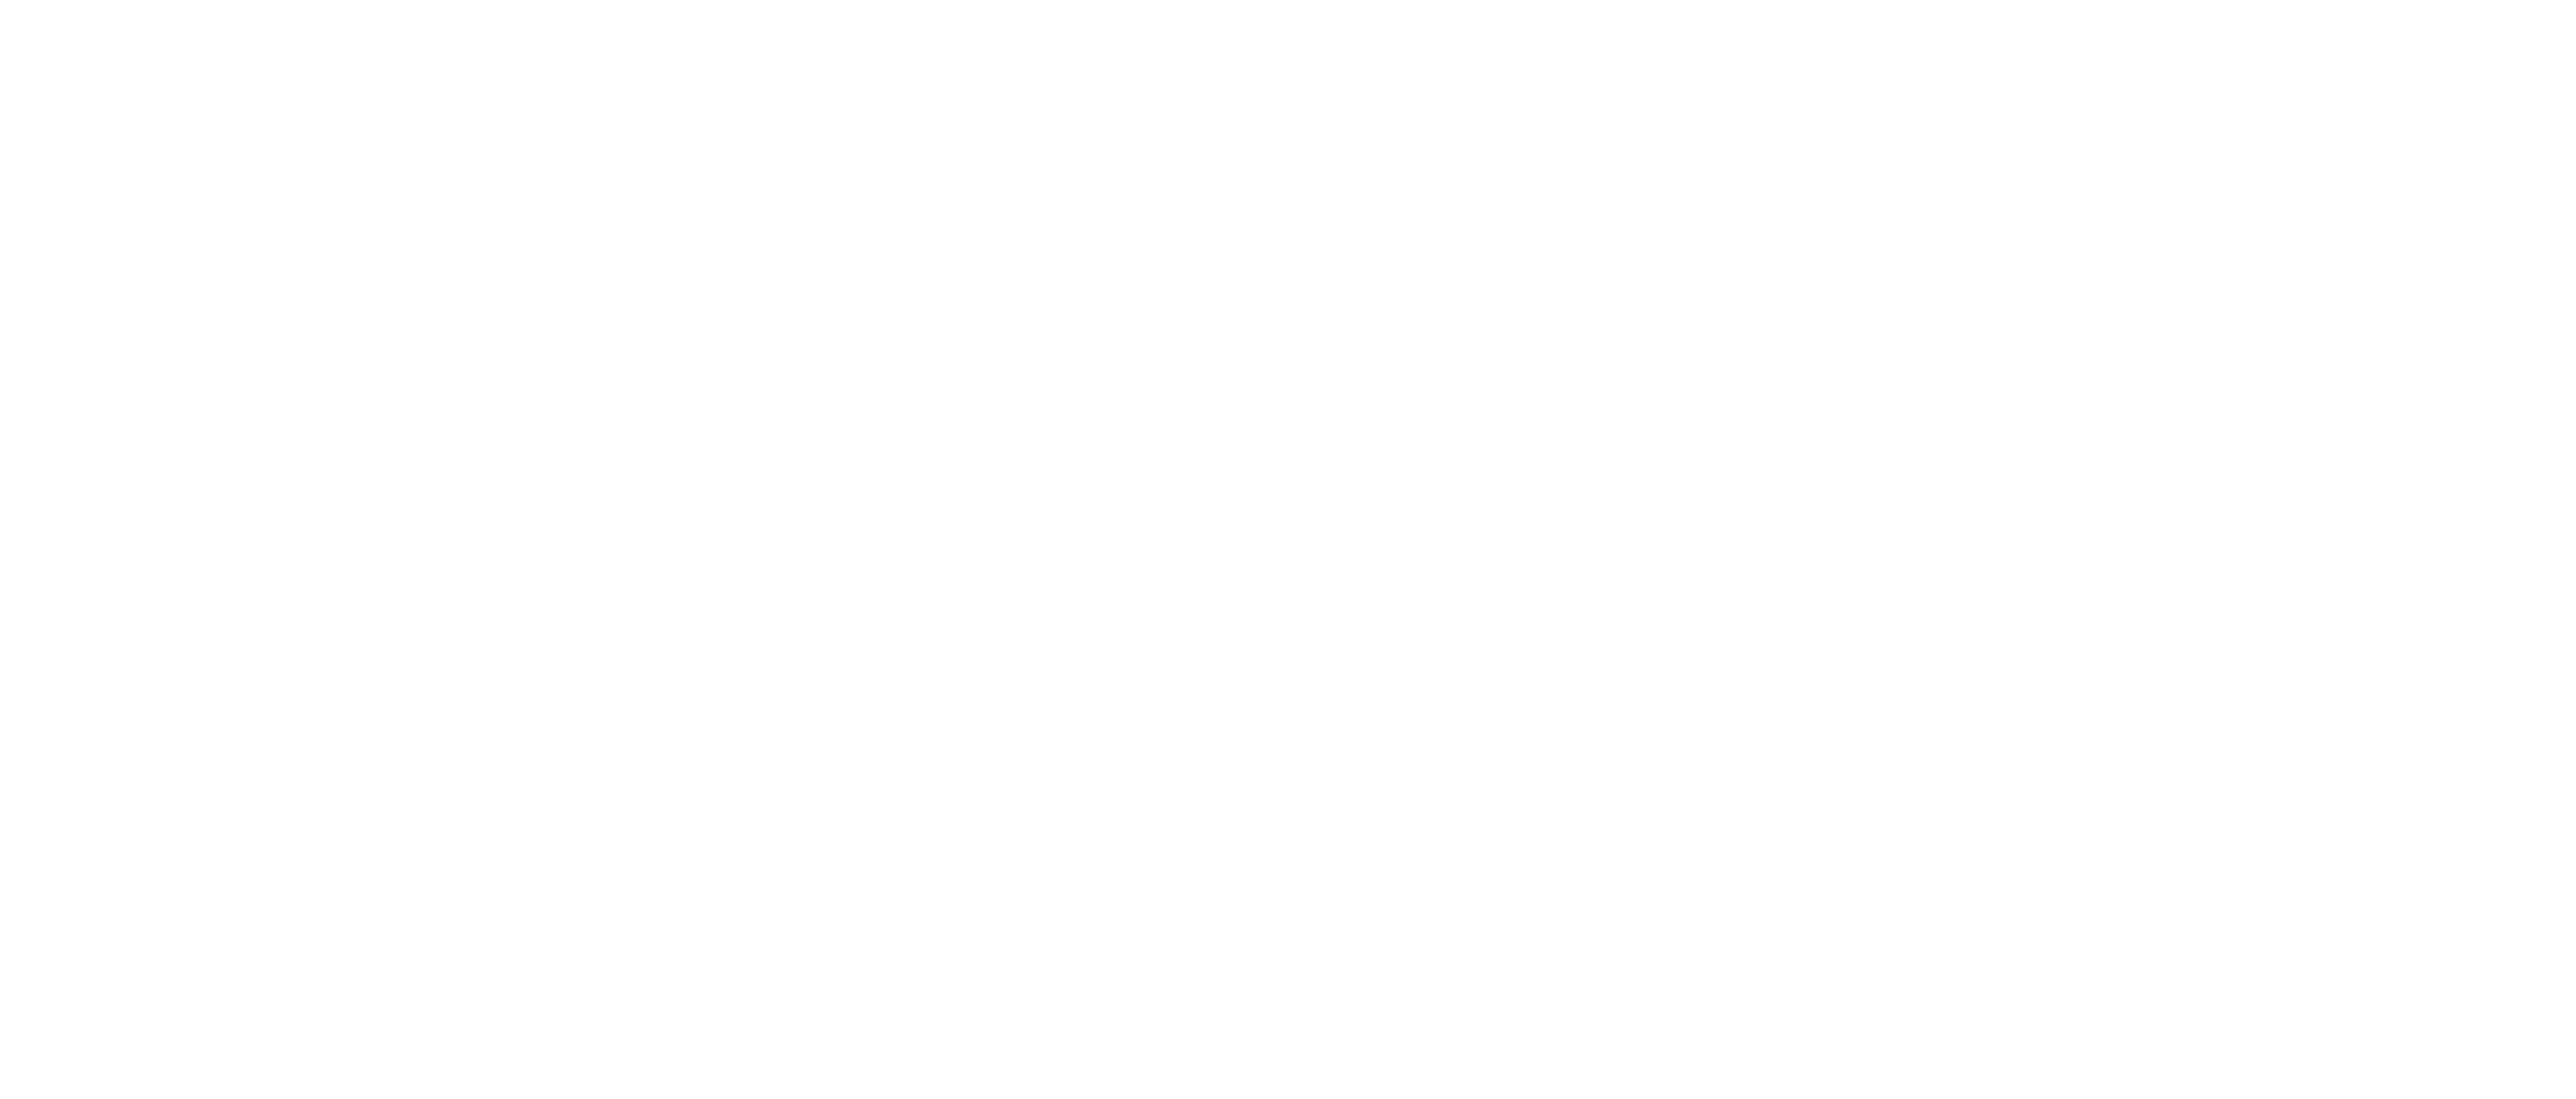 code-exitos-logo-white